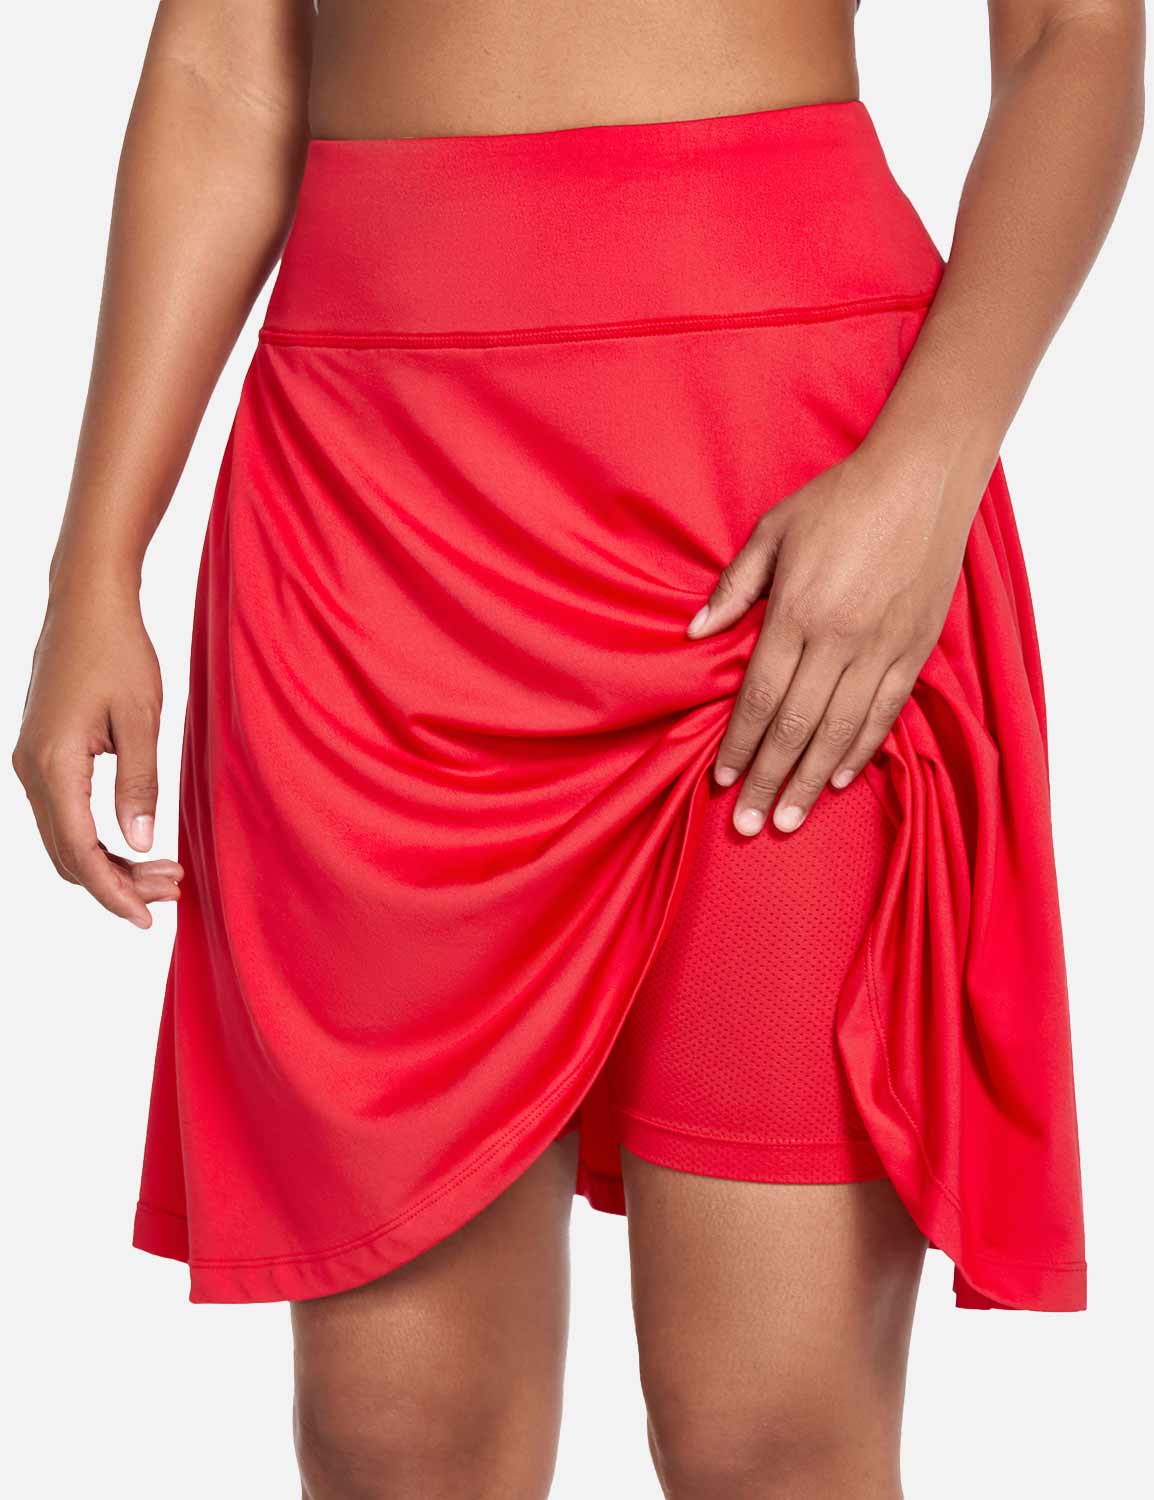 Baleaf Women's UPF 50+ Knee Length Golf Skorts w Pockets Fiery Red with Built-in Liner